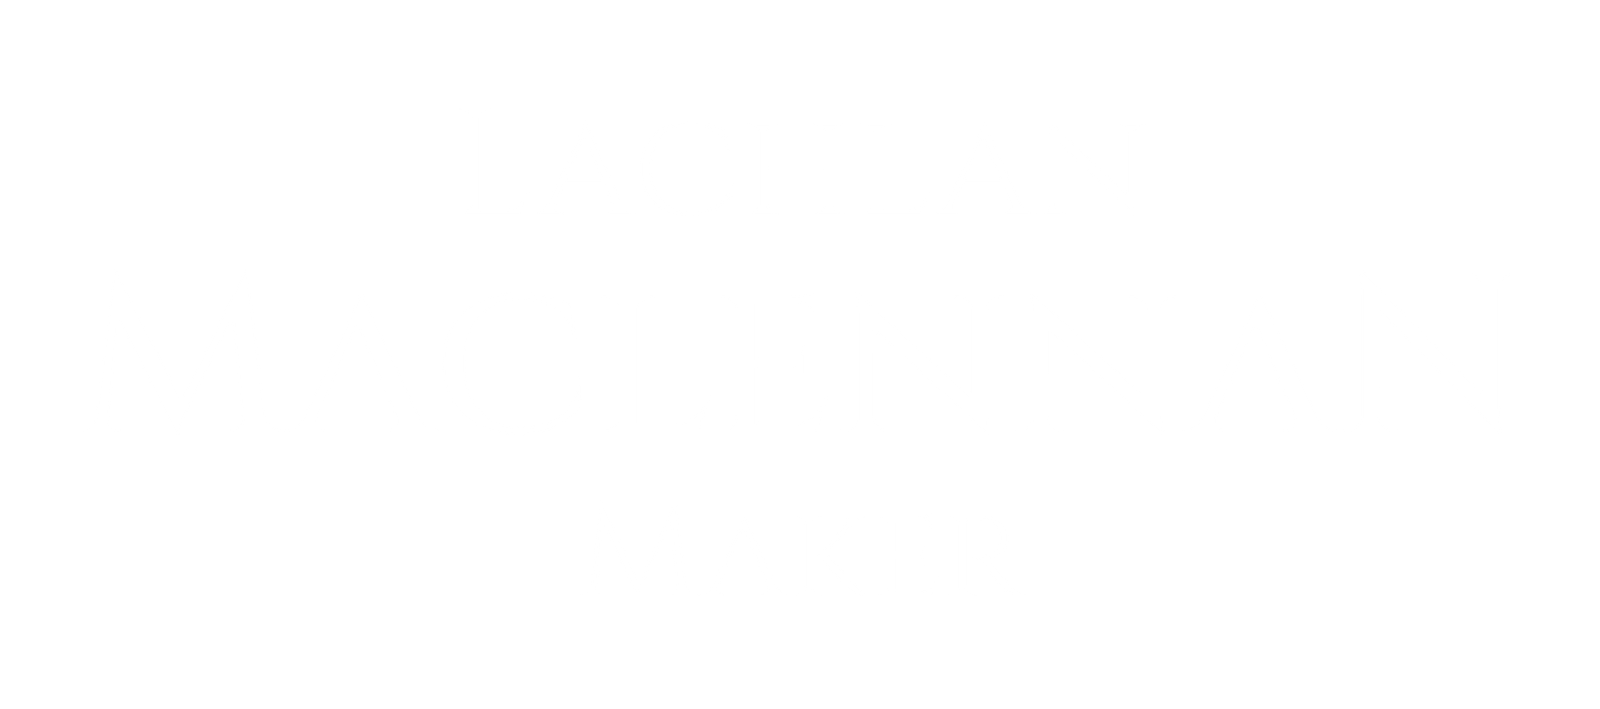 Lachlan Maclennan Carpenter and Maker logo elements